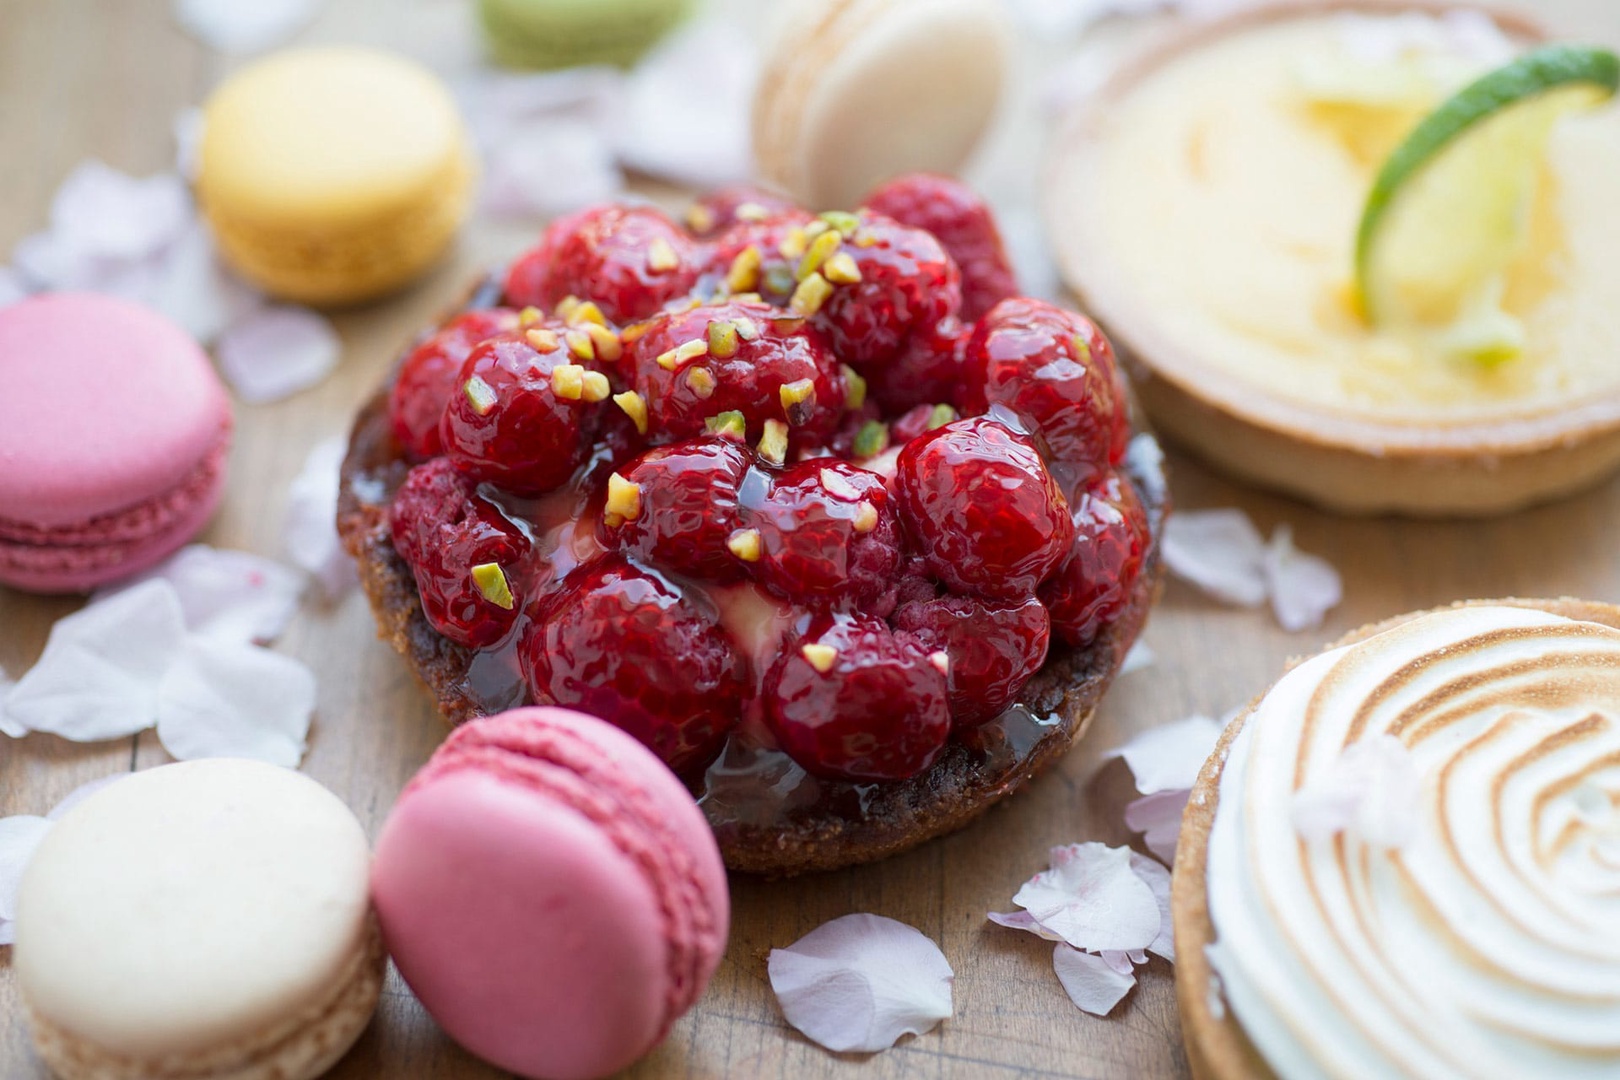 19-pastries-raspberry-tart